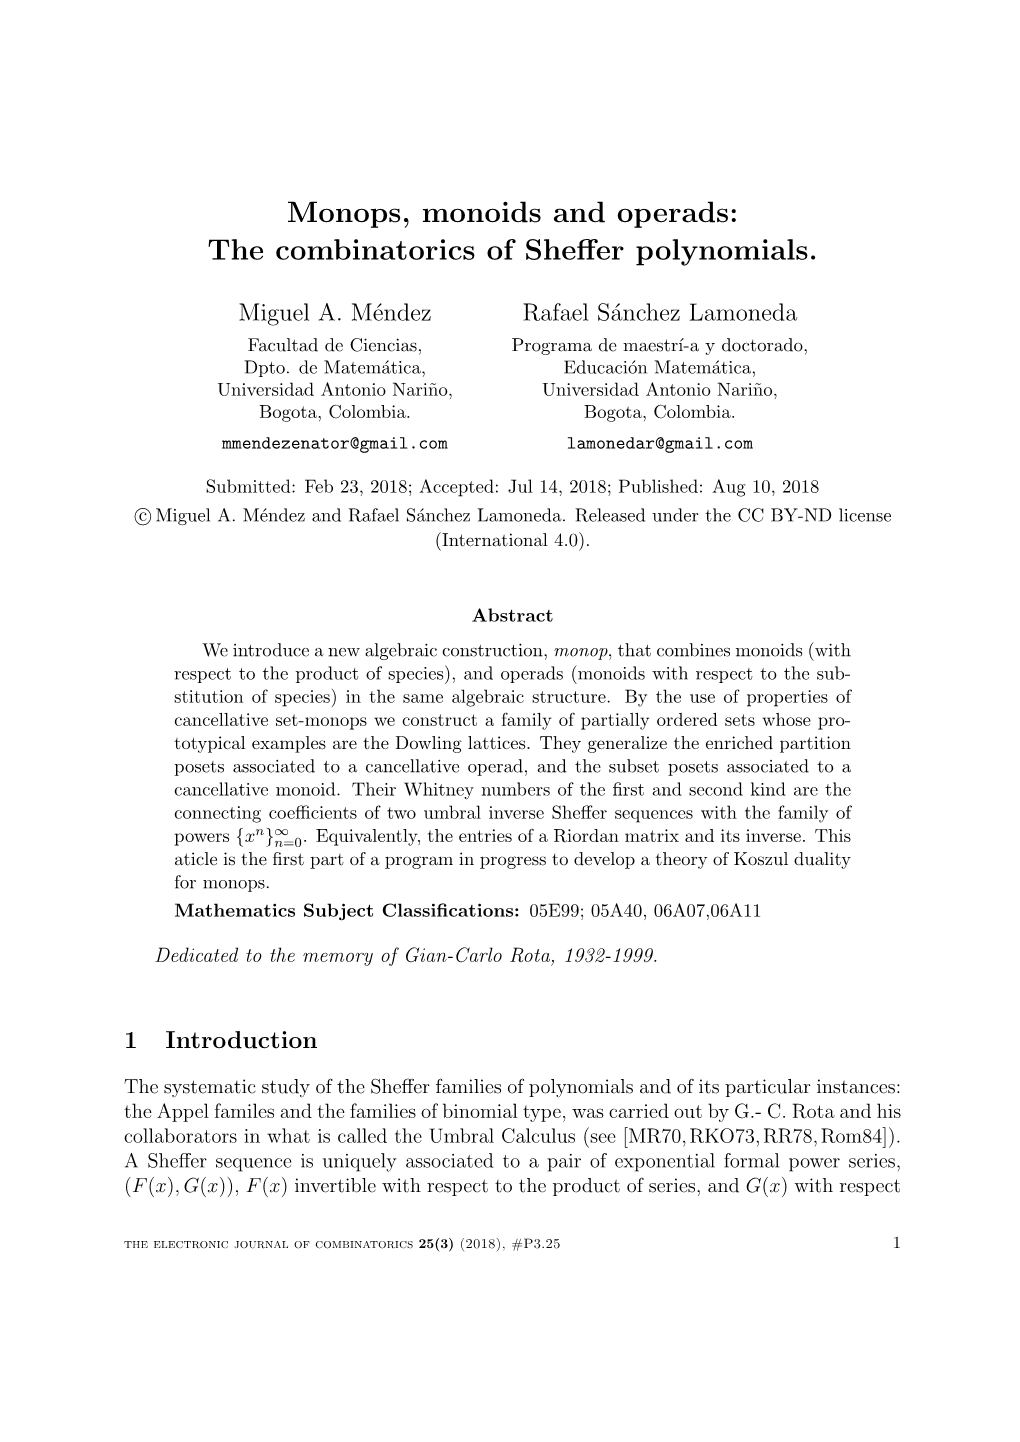 Monops, Monoids and Operads: the Combinatorics of Sheffer Polynomials